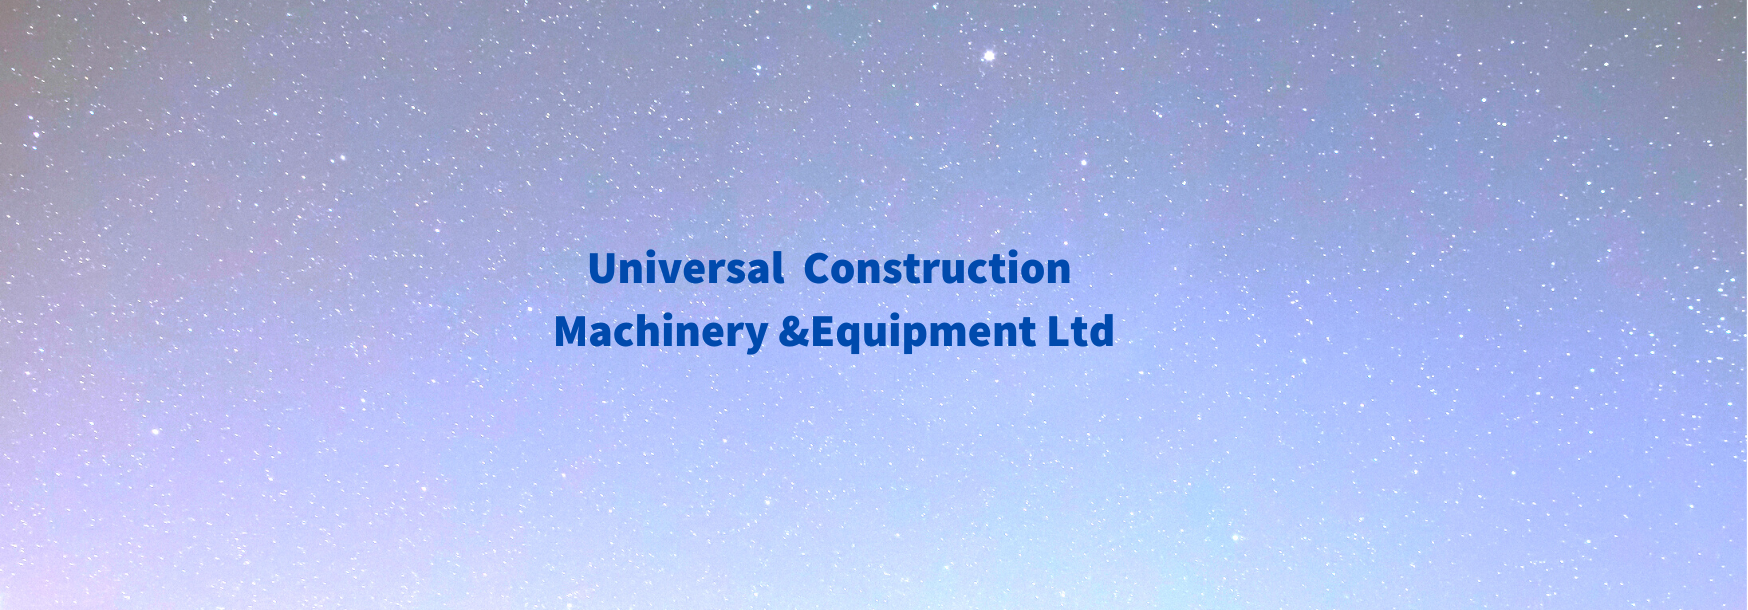 Universal Construction Machinery & Equipment Ltd